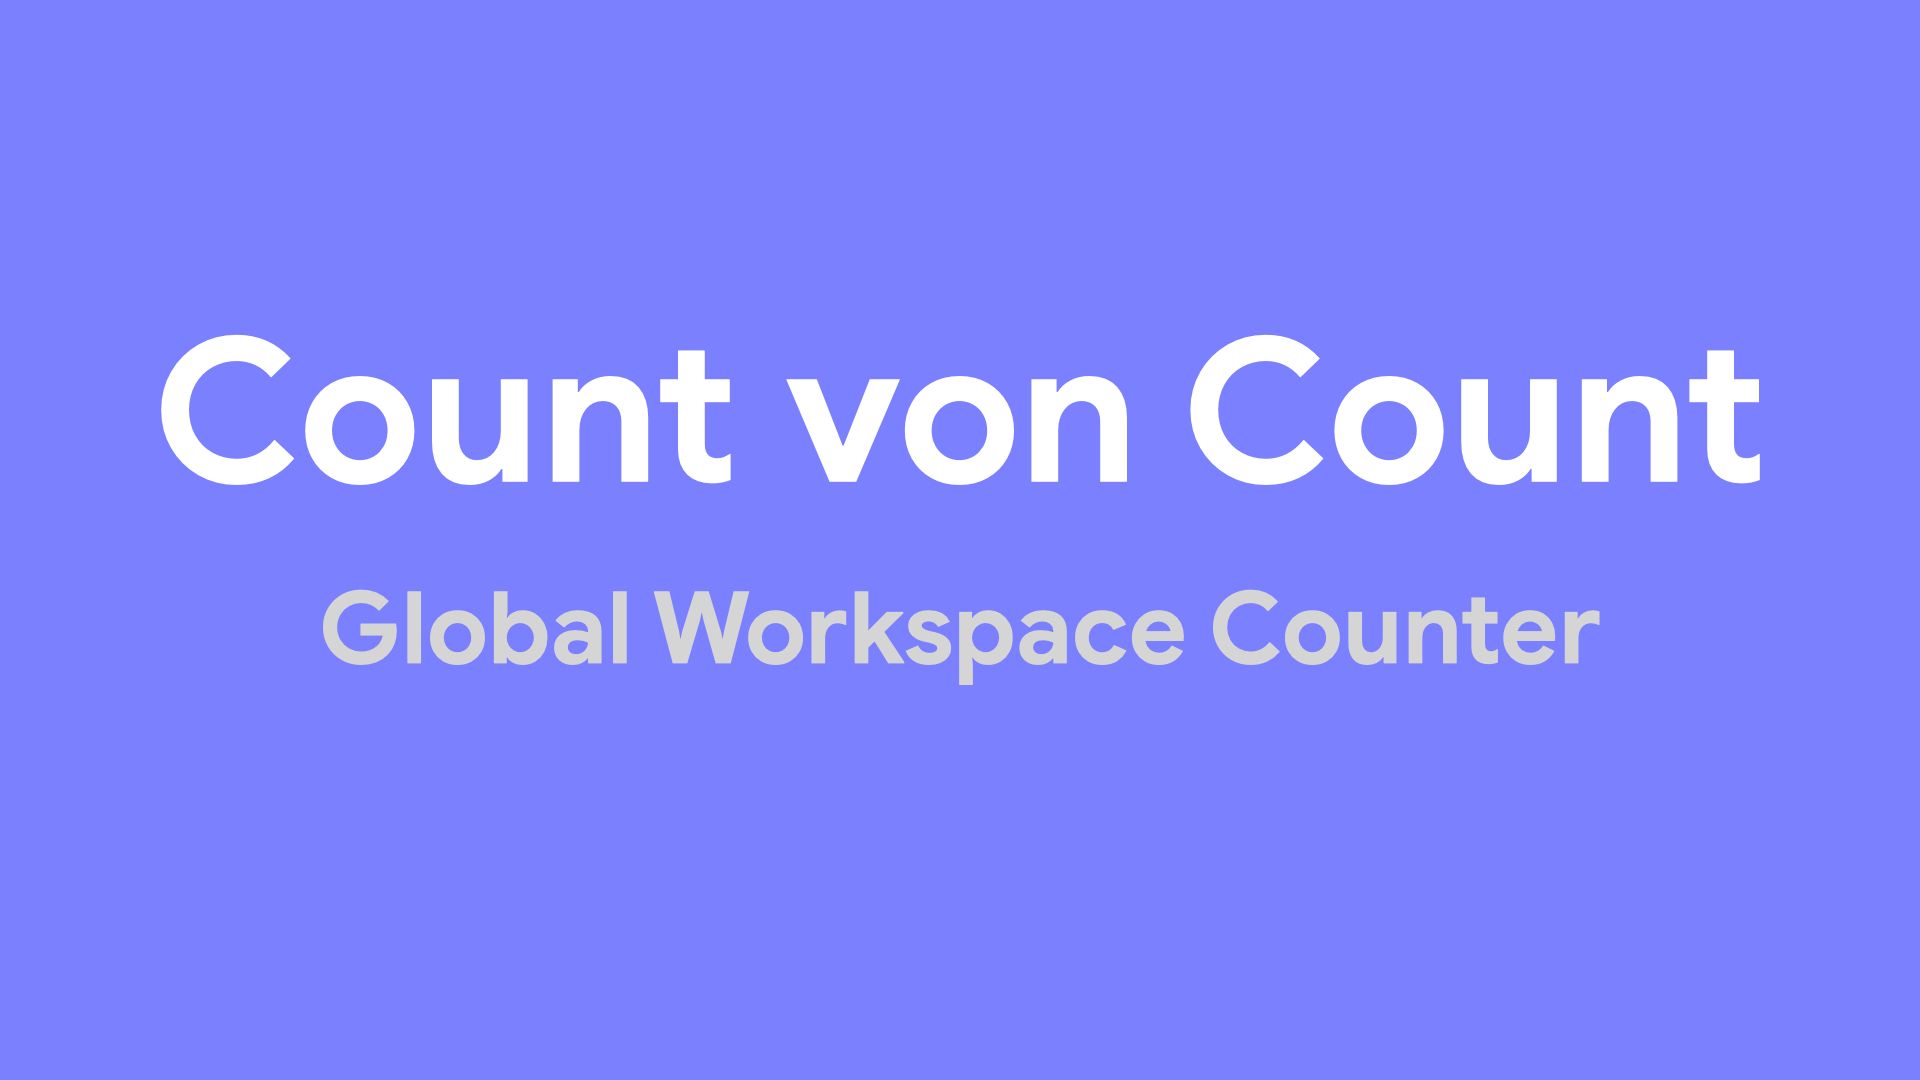 Count von Count — a Google Workspace Add-on built using Apps Script